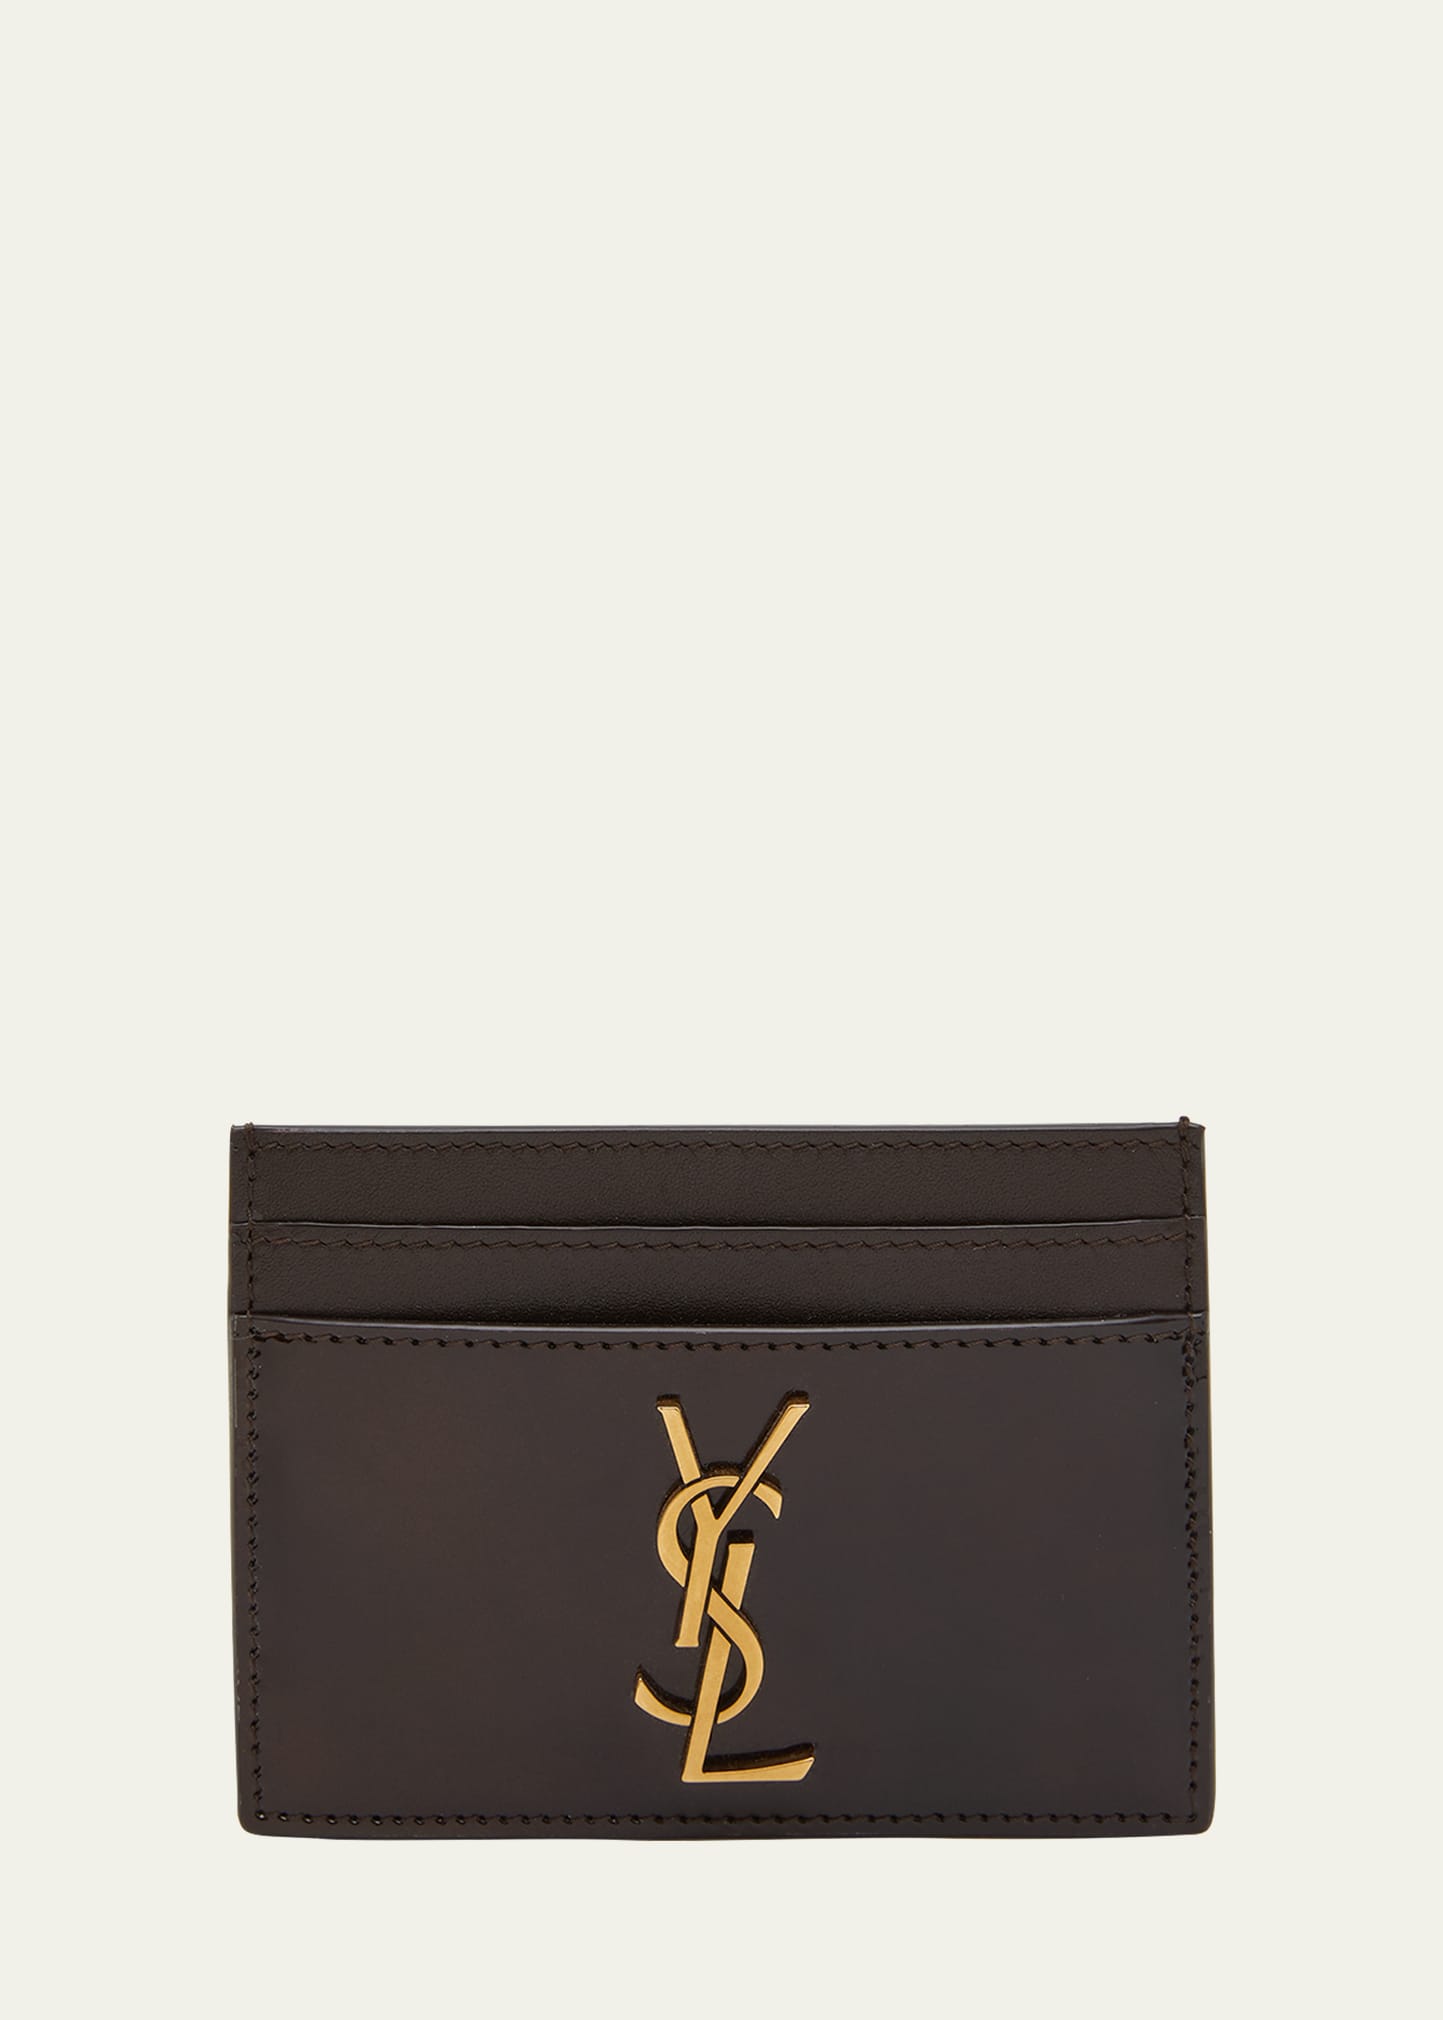 Ysl Leather Card Holder